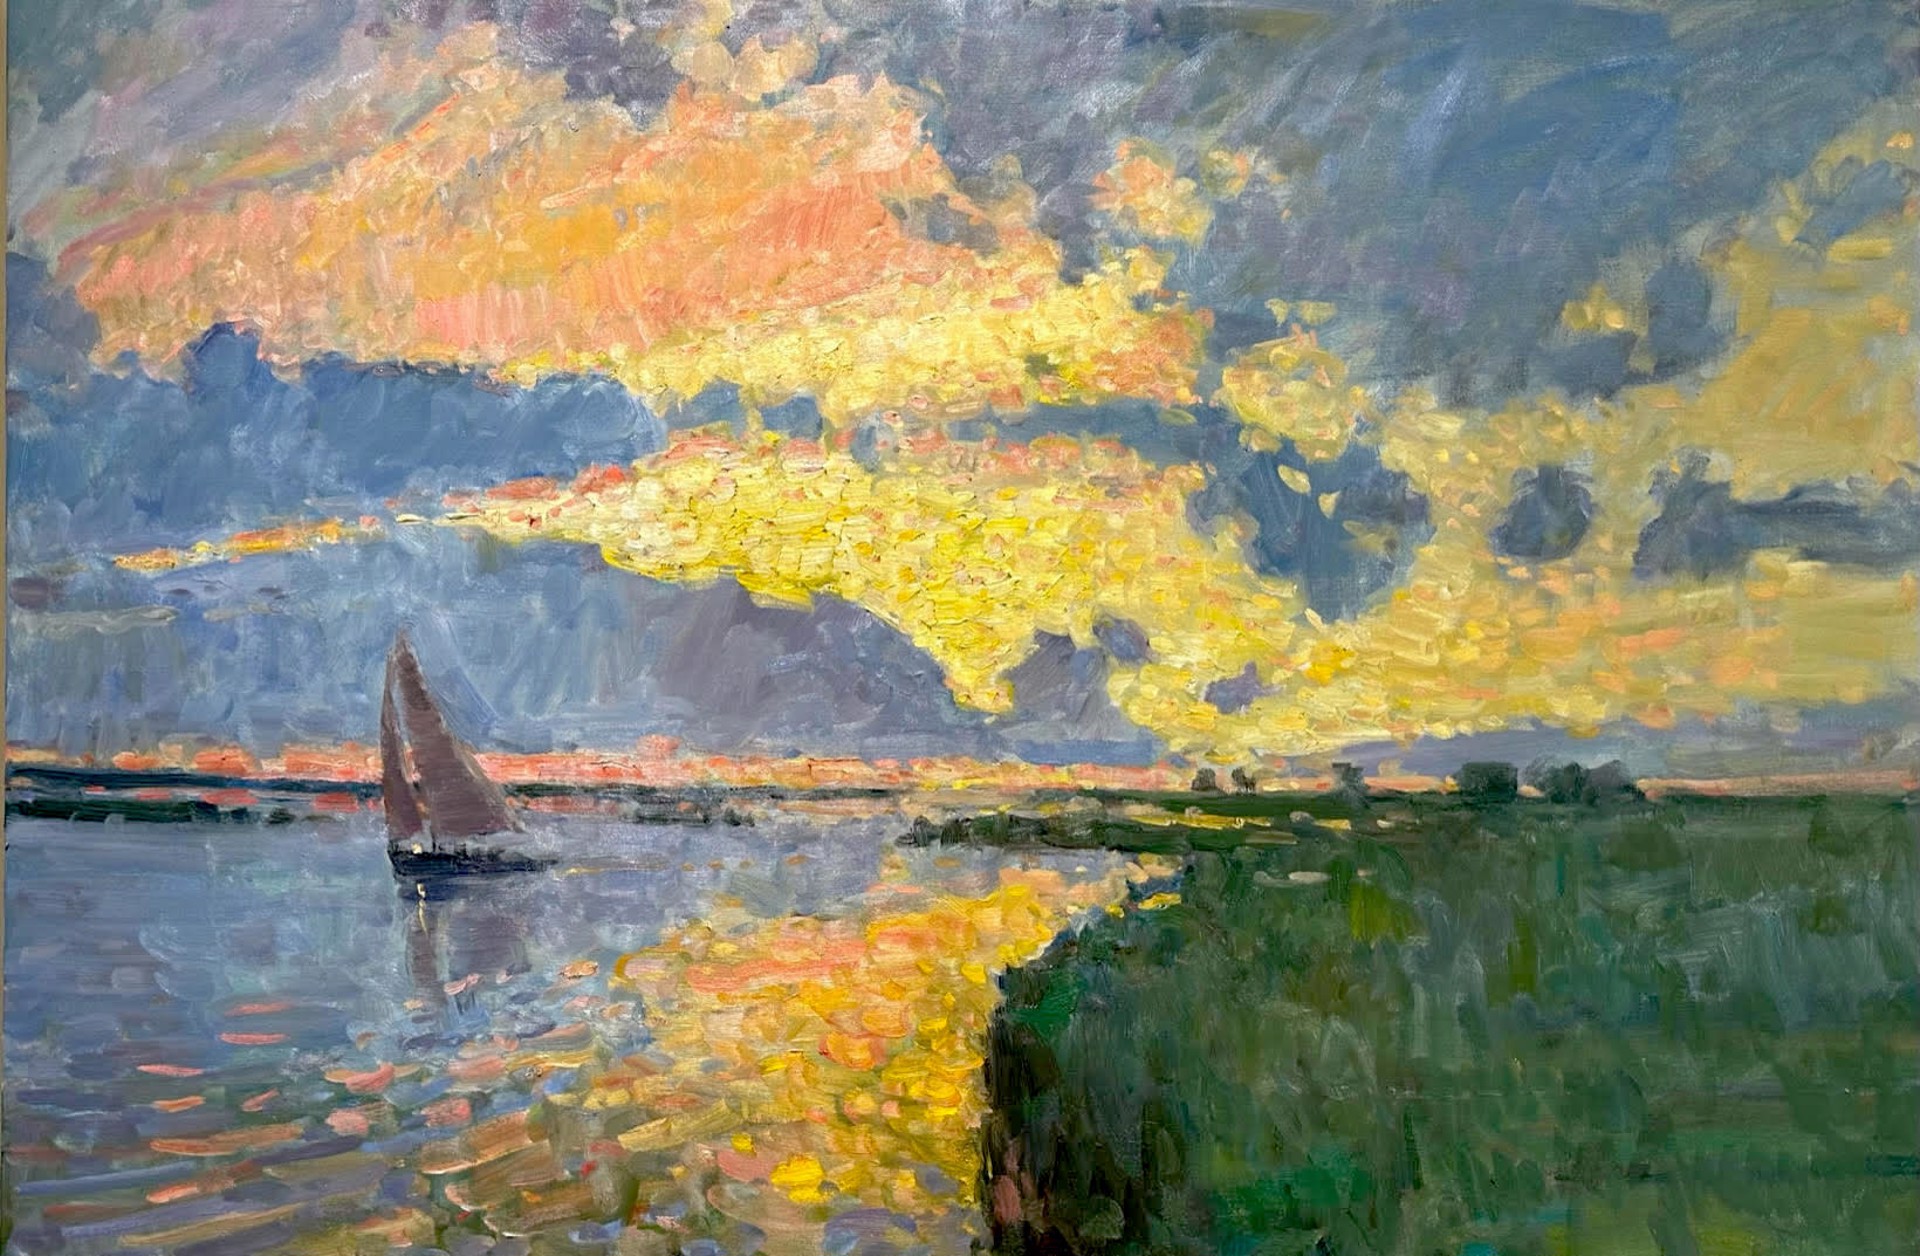 Twilight Sail by Richard Oversmith